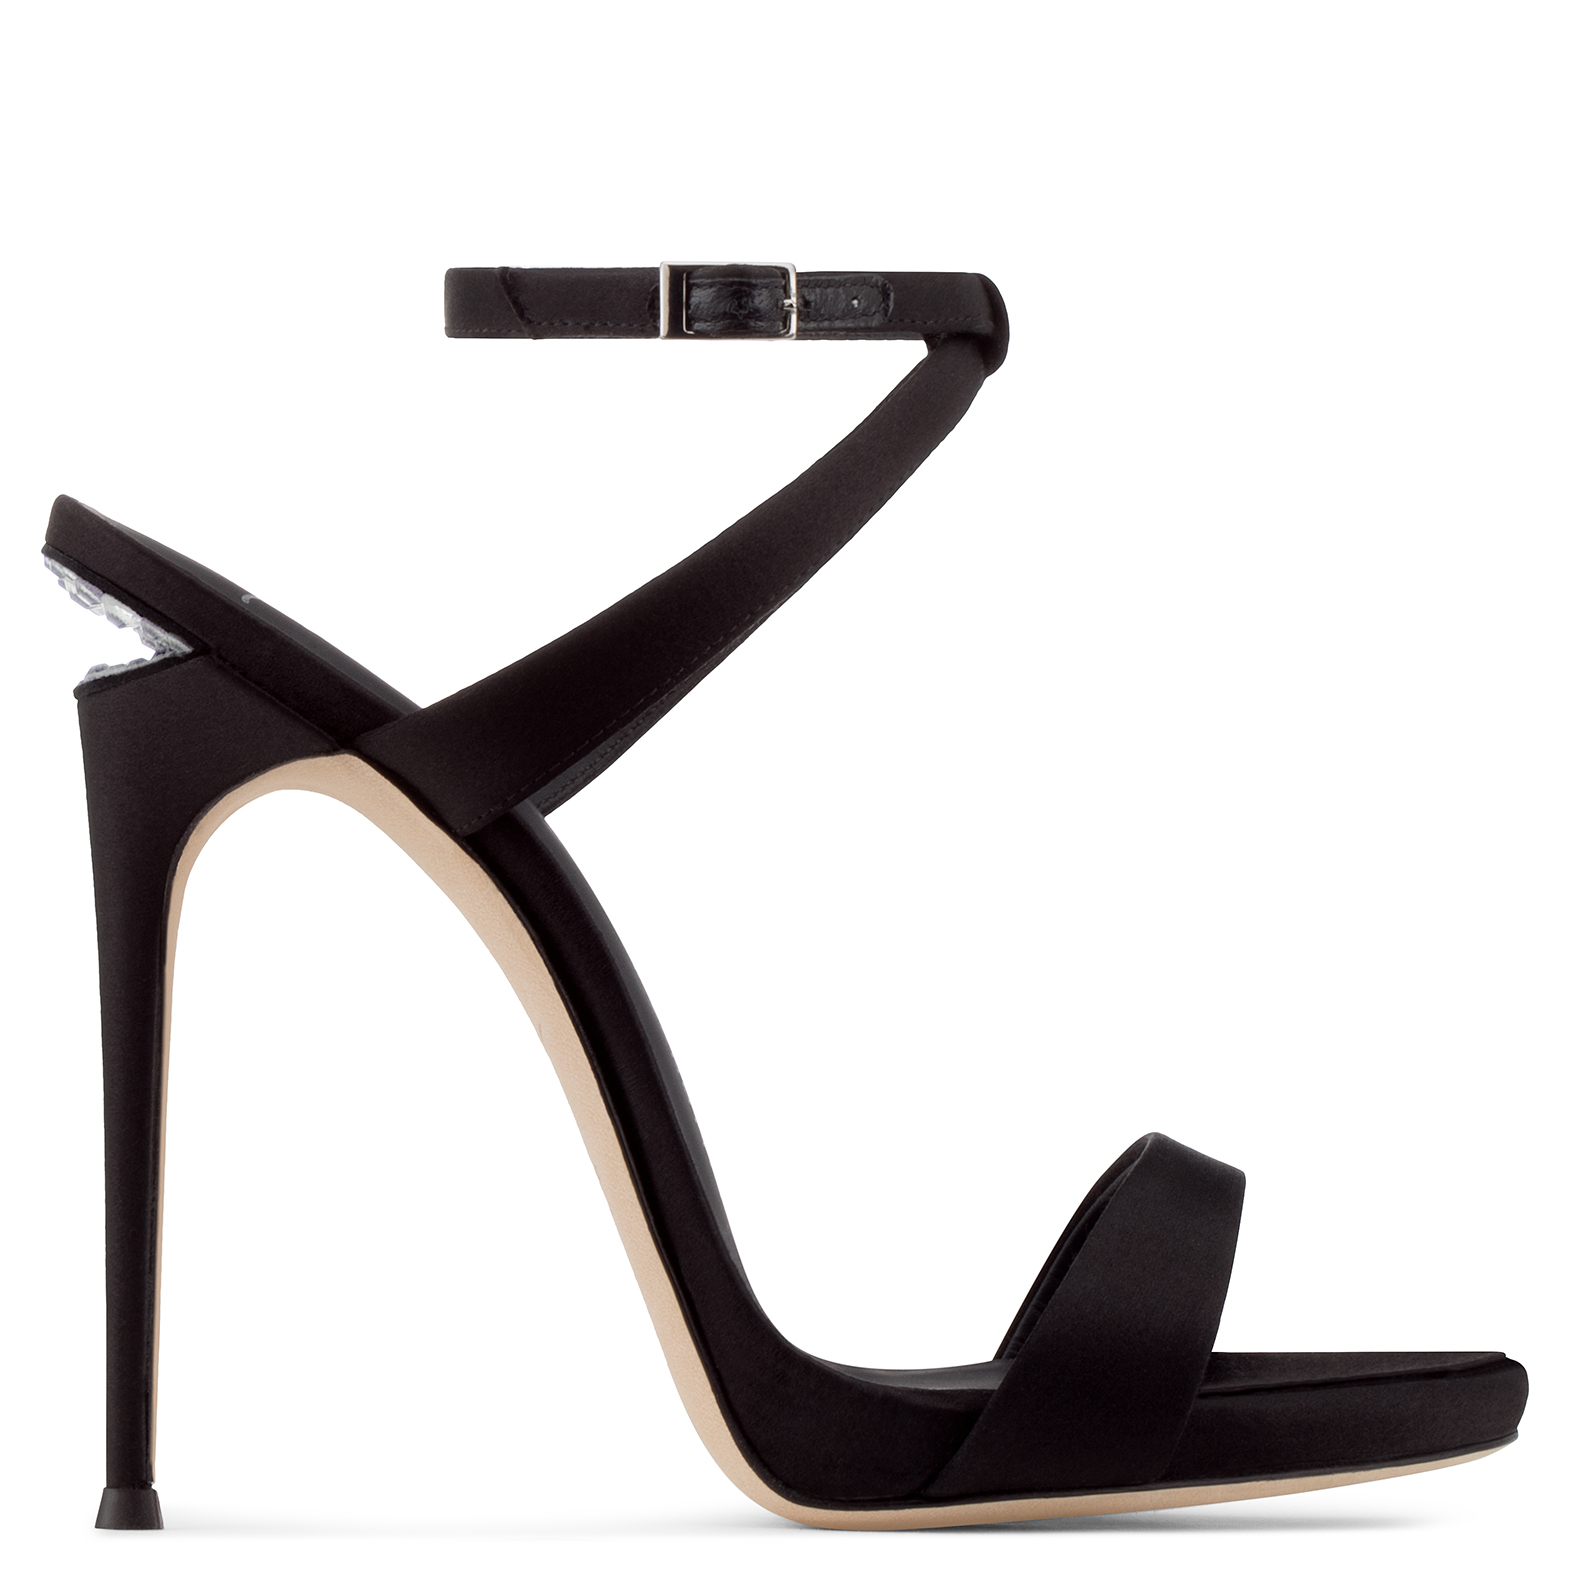 Penelope Cruz shoes | Women's designer shoes by Giuseppe Zanotti